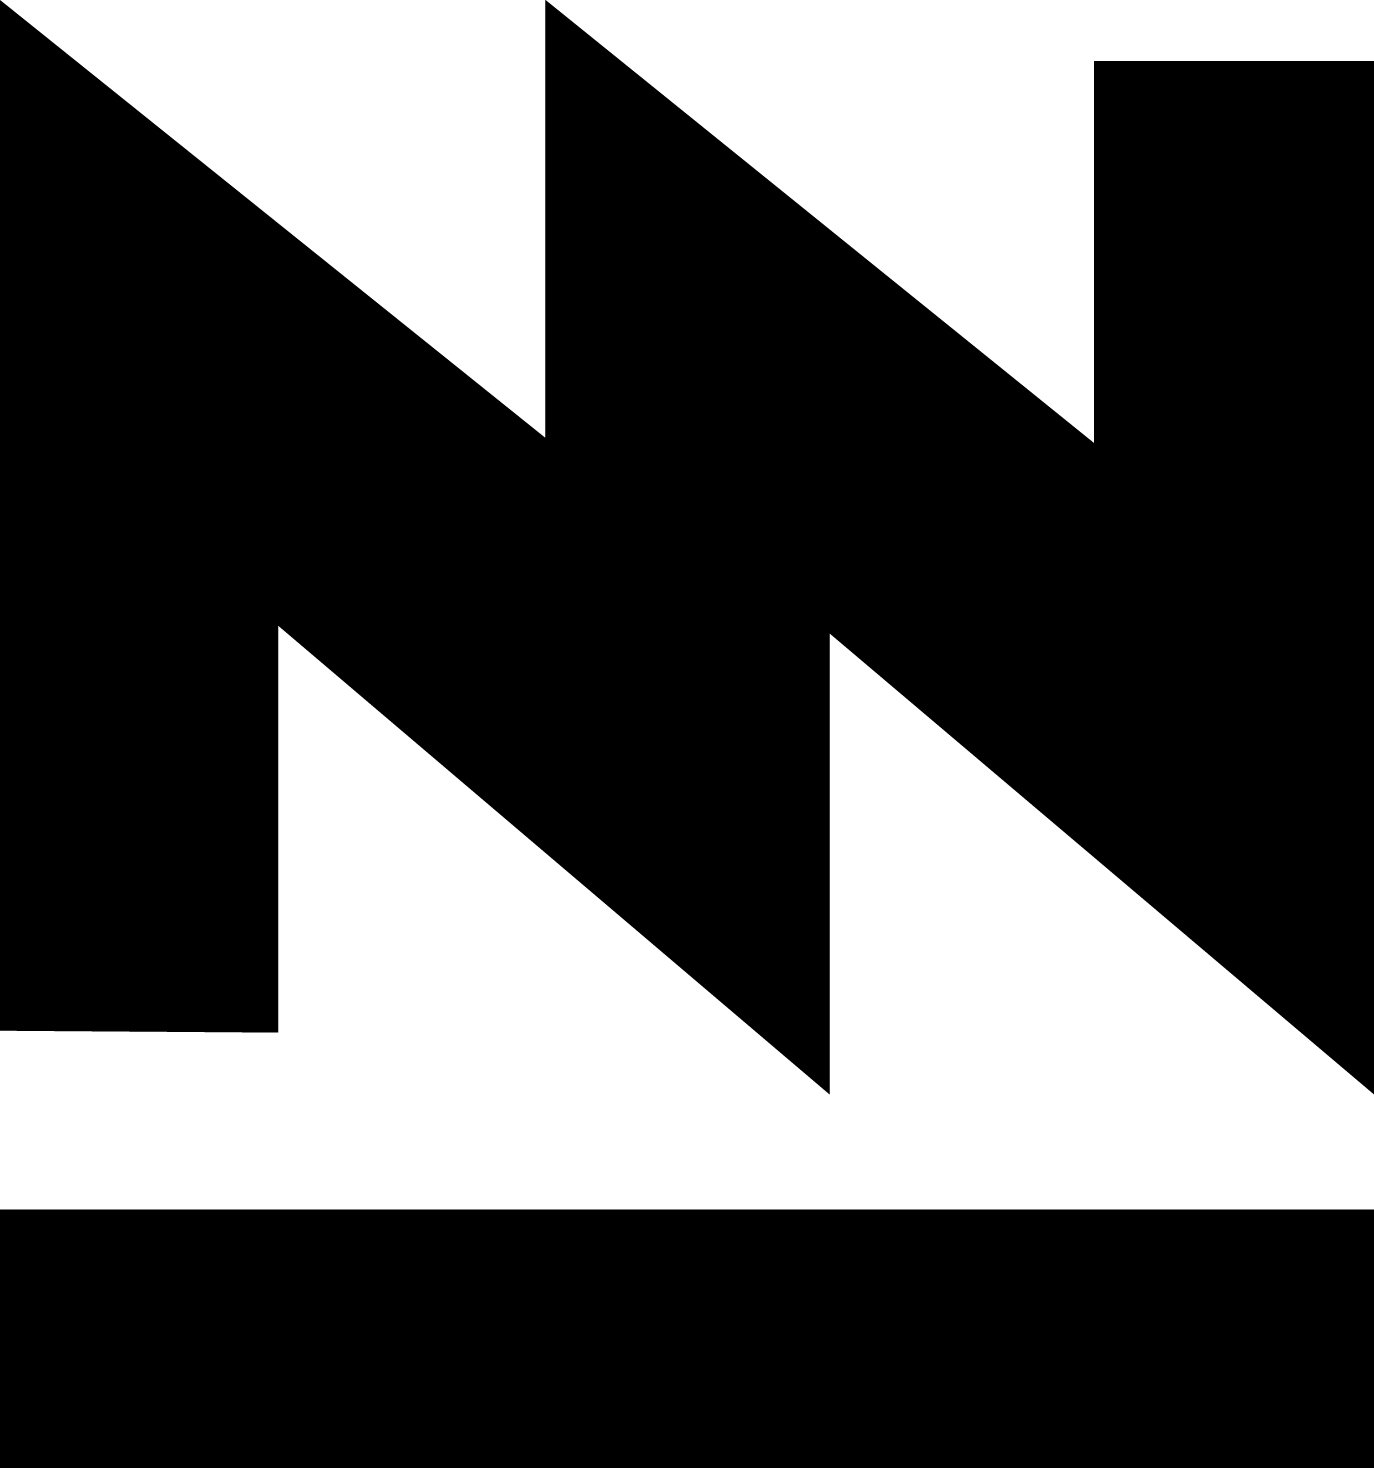 NN Dynamic Fastener Service, Inc. Trademark Registration